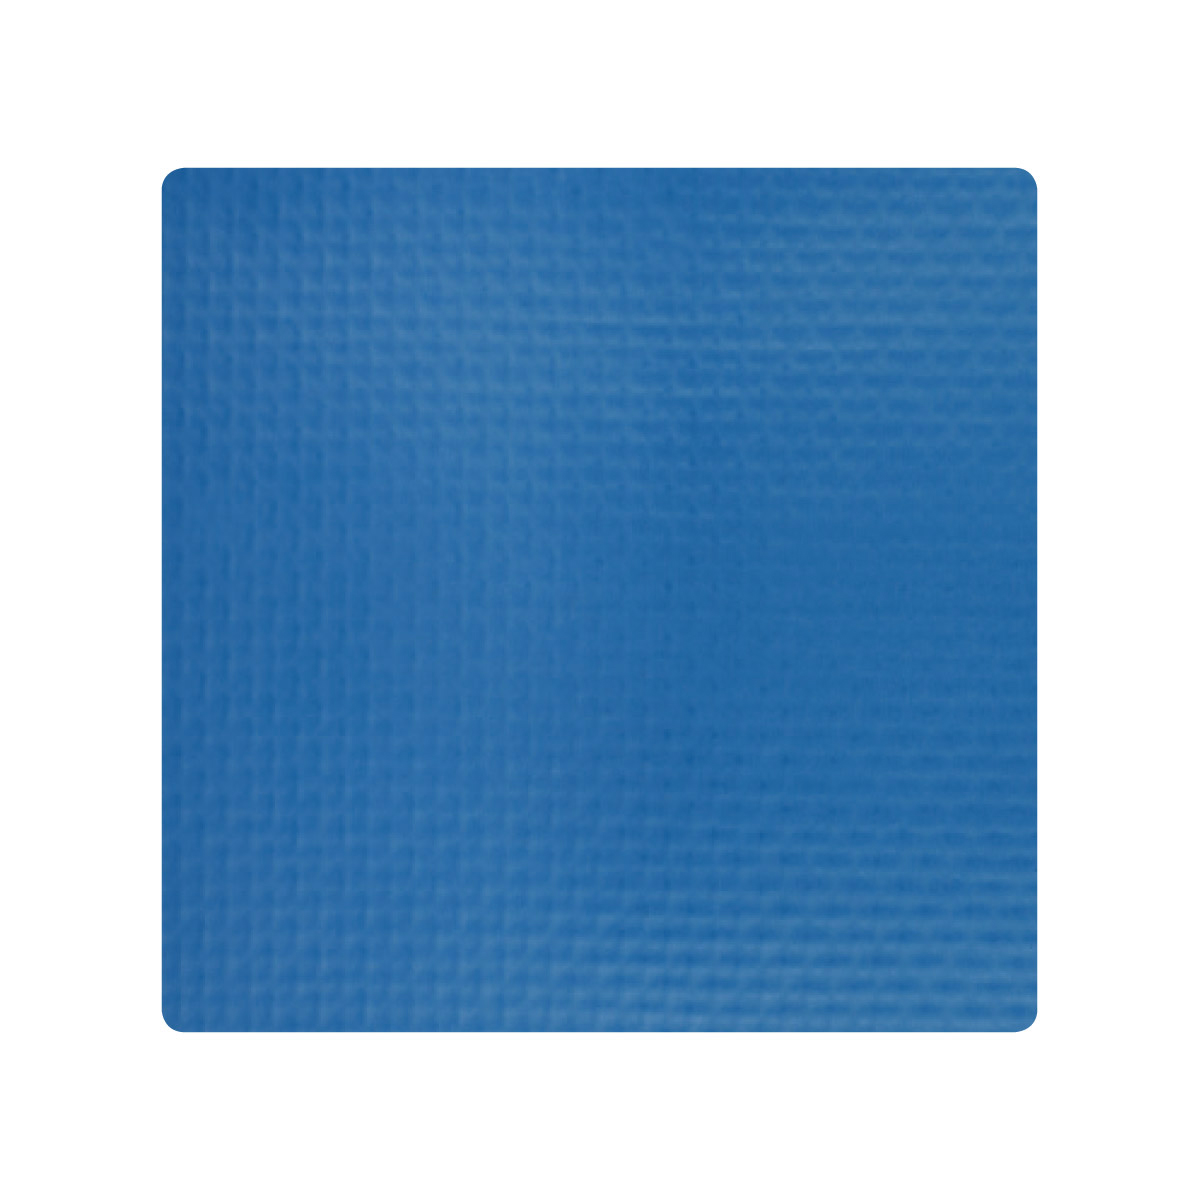 Schwimmbadfolie deluxe rutschfestt gewebeverstärkt PVC dunkelblau 1,5 x 165 cm l=20m Rolle
 Schwimmbadfolie deluxe rutschfestt gewebeverstärkt PVC dunkelblau 1,5 x 165 cm l=20m Rolle
